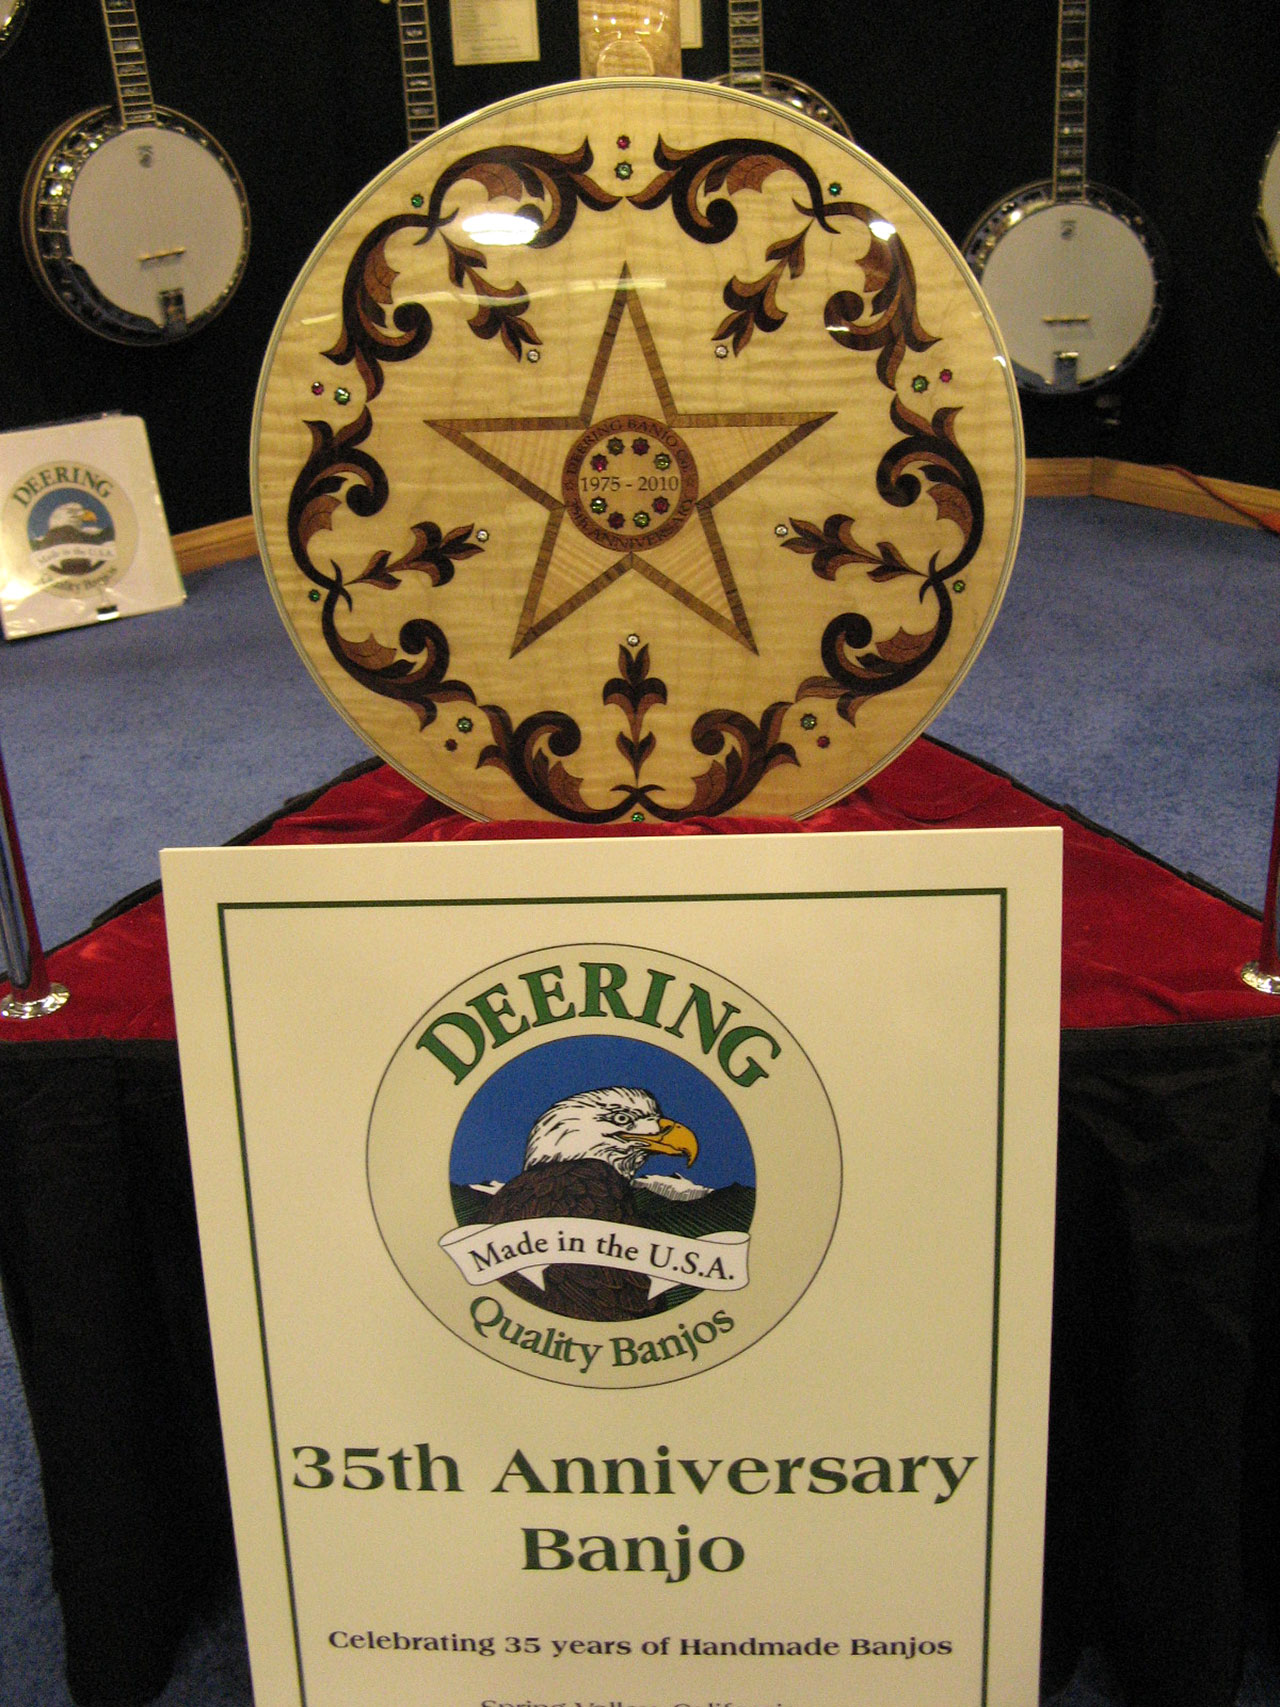 Deerring 35th Anniversary Limited Edition Banjo  On display at NAMM 2011